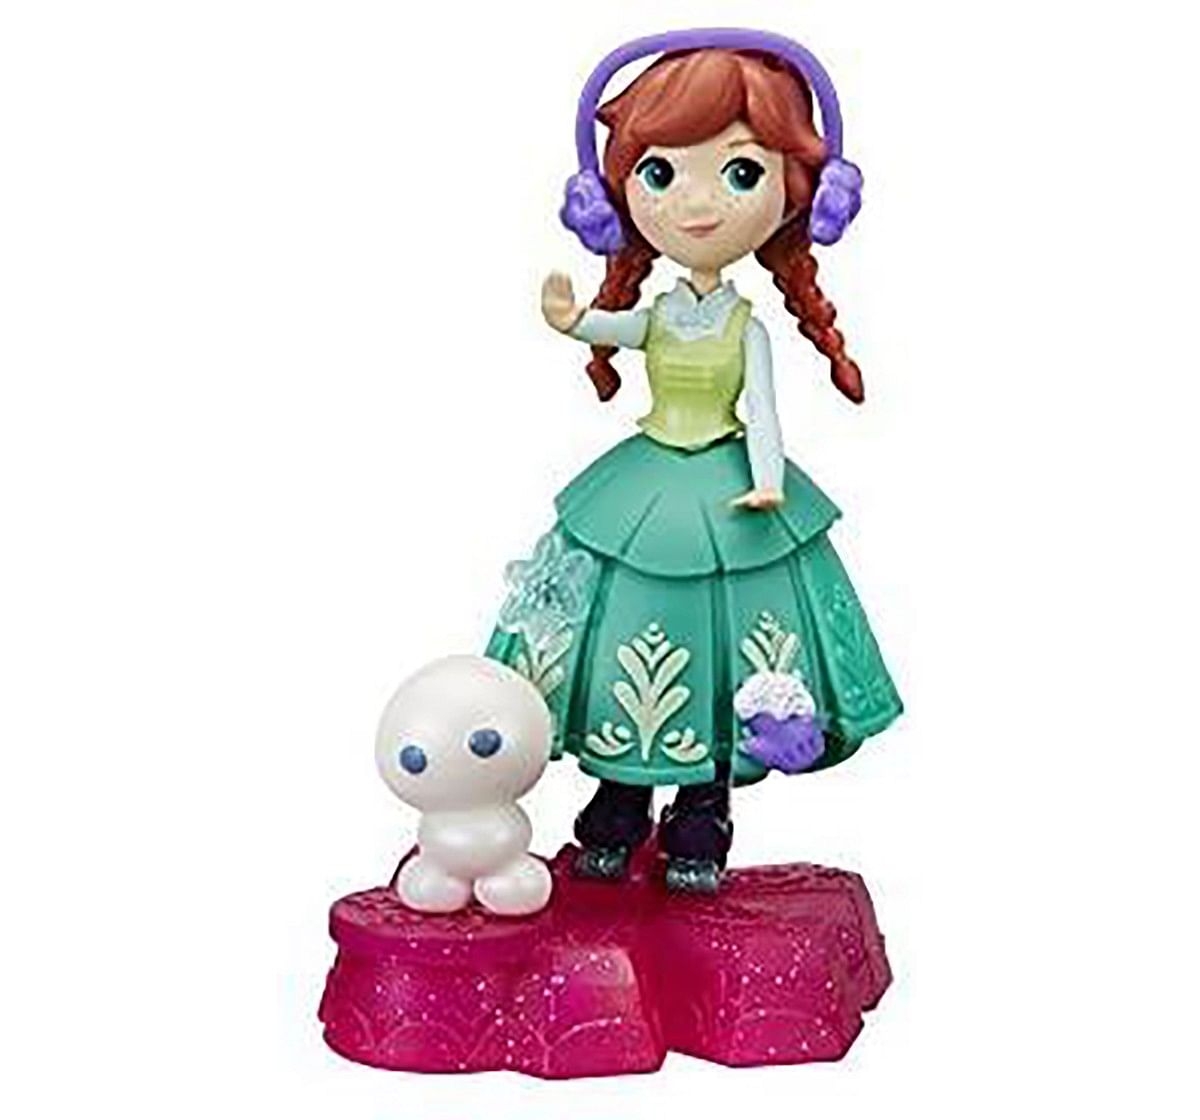  Disney Frozen Little Kingdom Glide 'N Go Assorted Dolls & Accessories for Girls age 4Y+ 